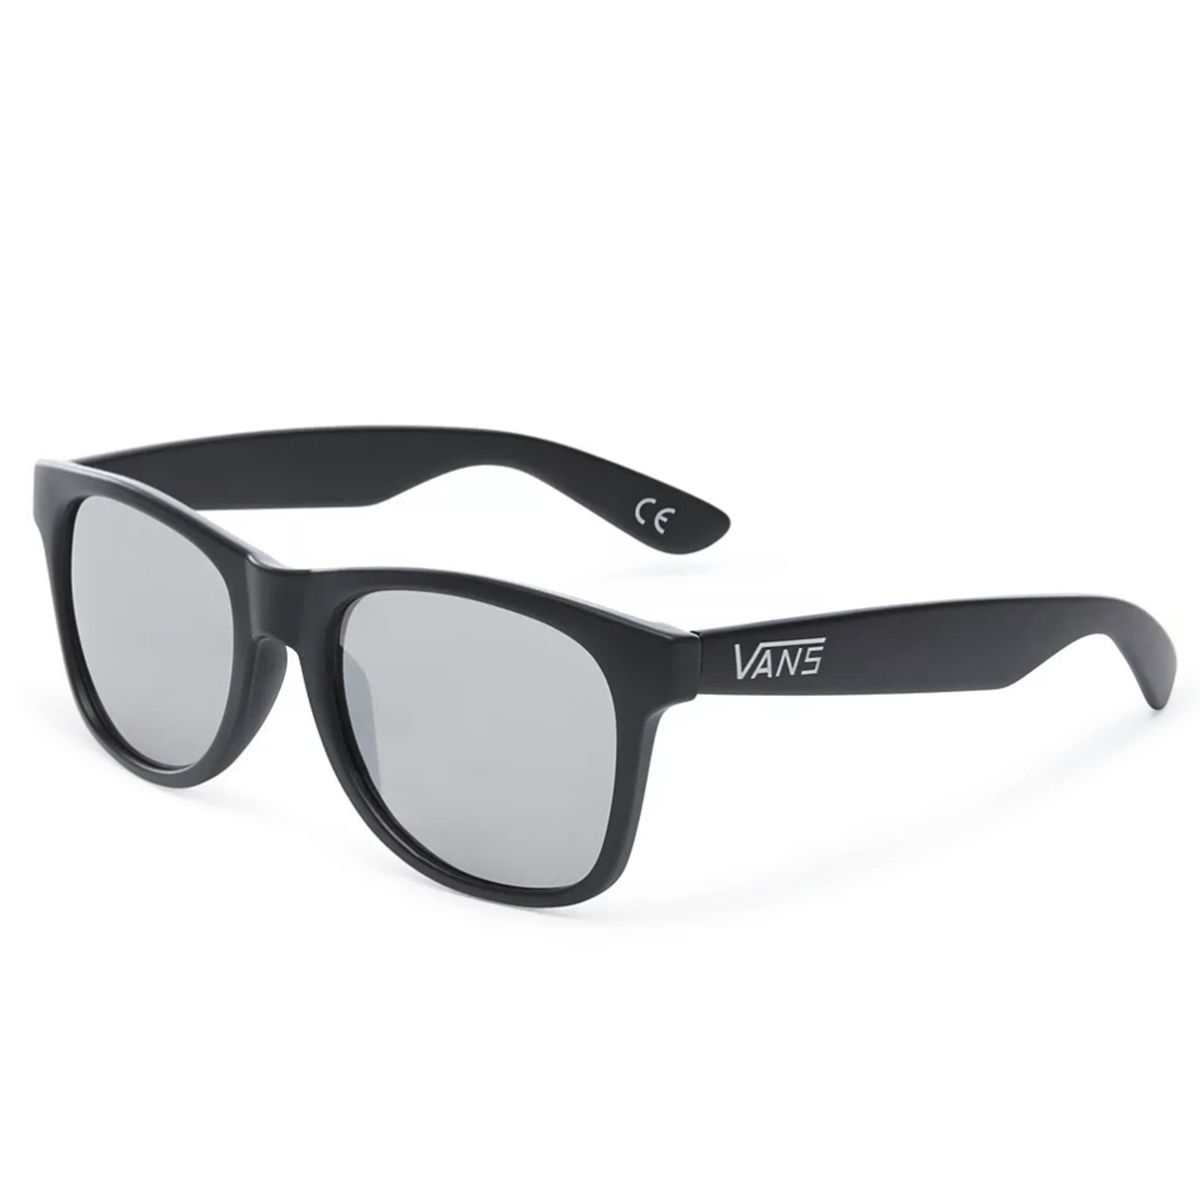 VANS Sunglasses Spicoli 4 Shades Silver Black / Mirror Matte